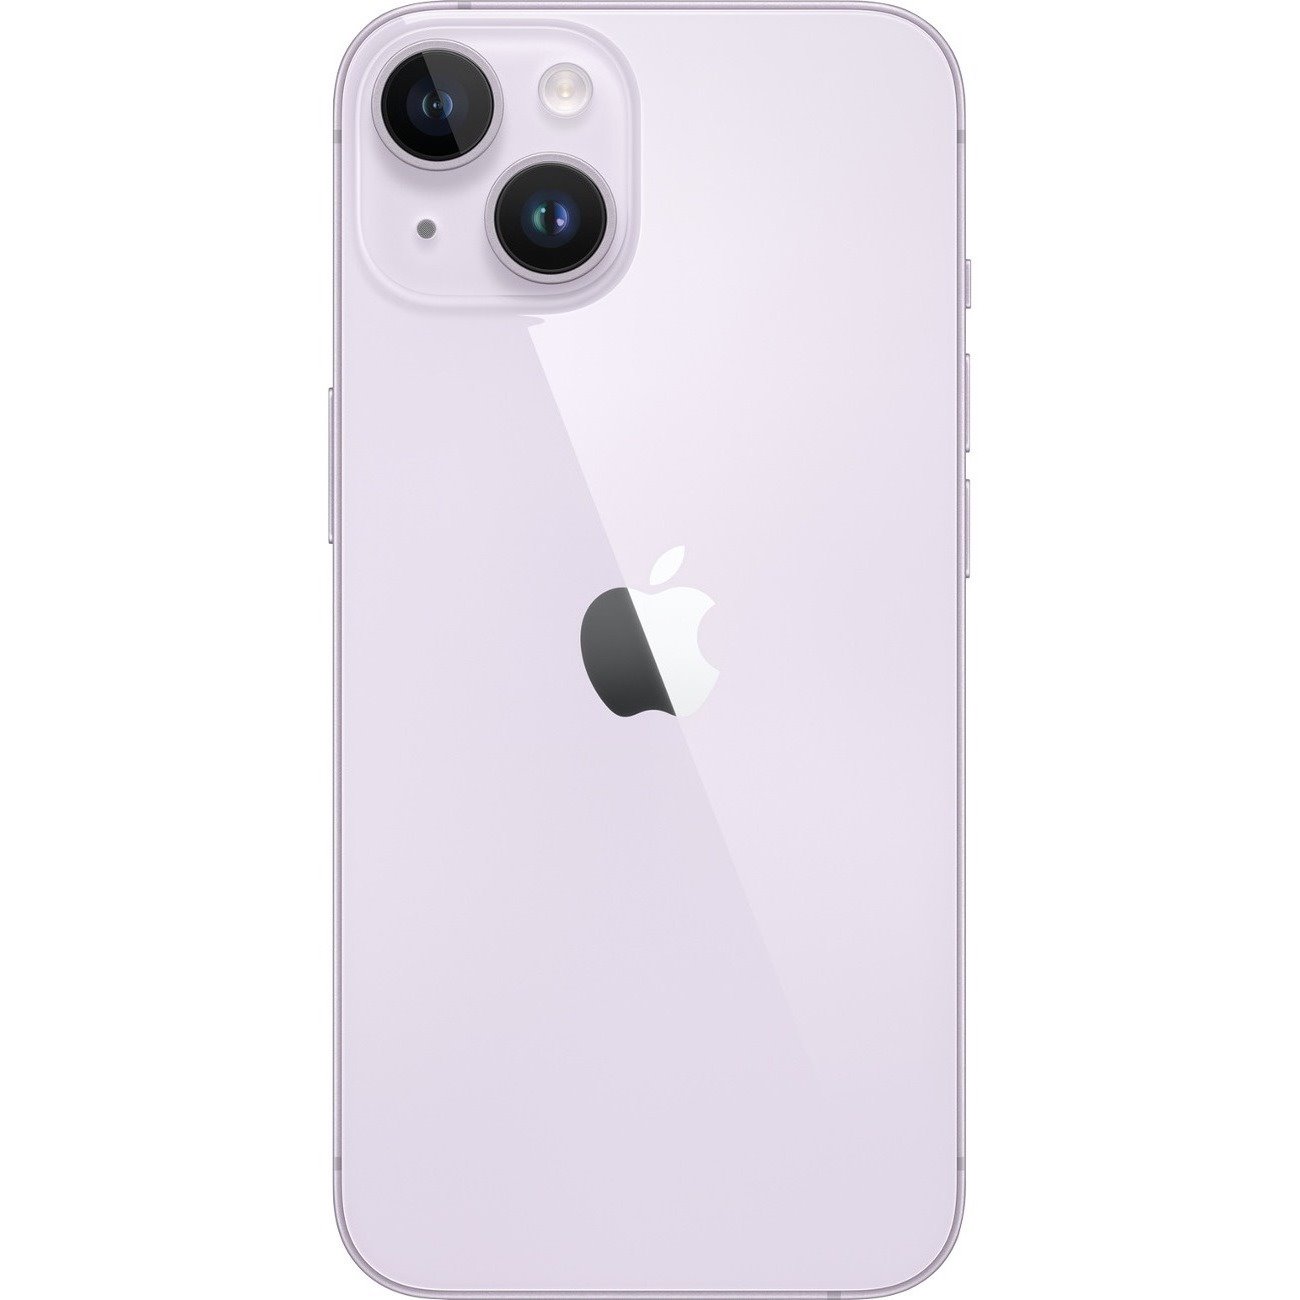 Apple iPhone 14 Plus A2886 512 GB Smartphone - 6.7" OLED 2778 x 1284 - Hexa-core (AvalancheDual-core (2 Core) 3.23 GHz + Blizzard Quad-core (4 Core) 1.82 GHz - 6 GB RAM - iOS 16 - 5G - Purple